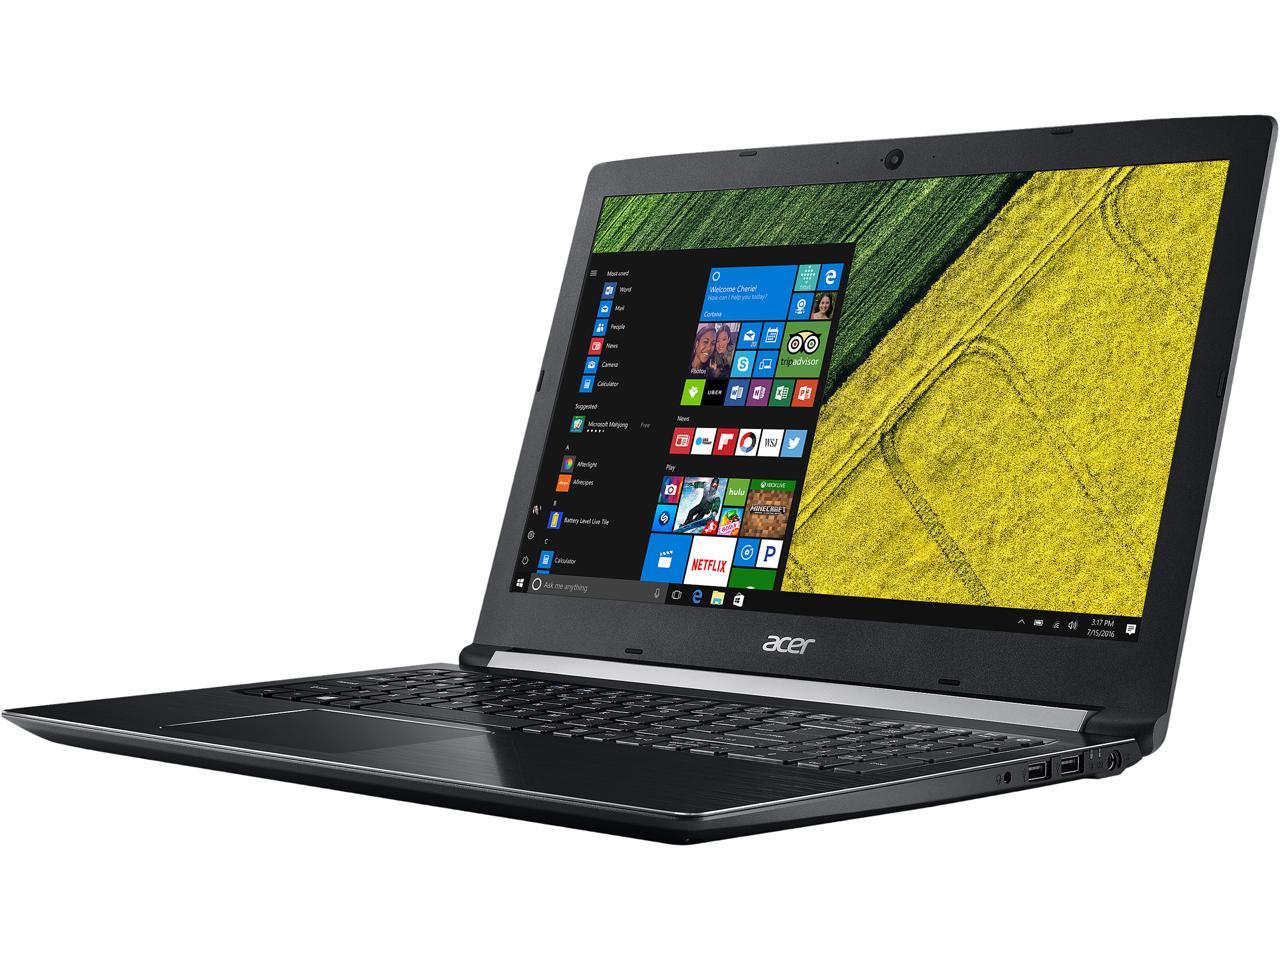 Acer Aspire 15.6" FHD Laptop with Intel Core i5-7200U / 8GB / 1TB / Win 10 / 2GB Video